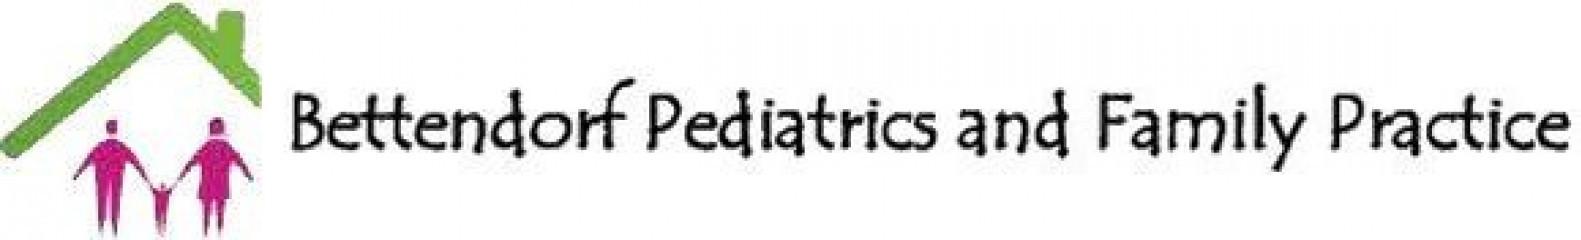 Bettendorf Pediatric & Family Practice (1319342)